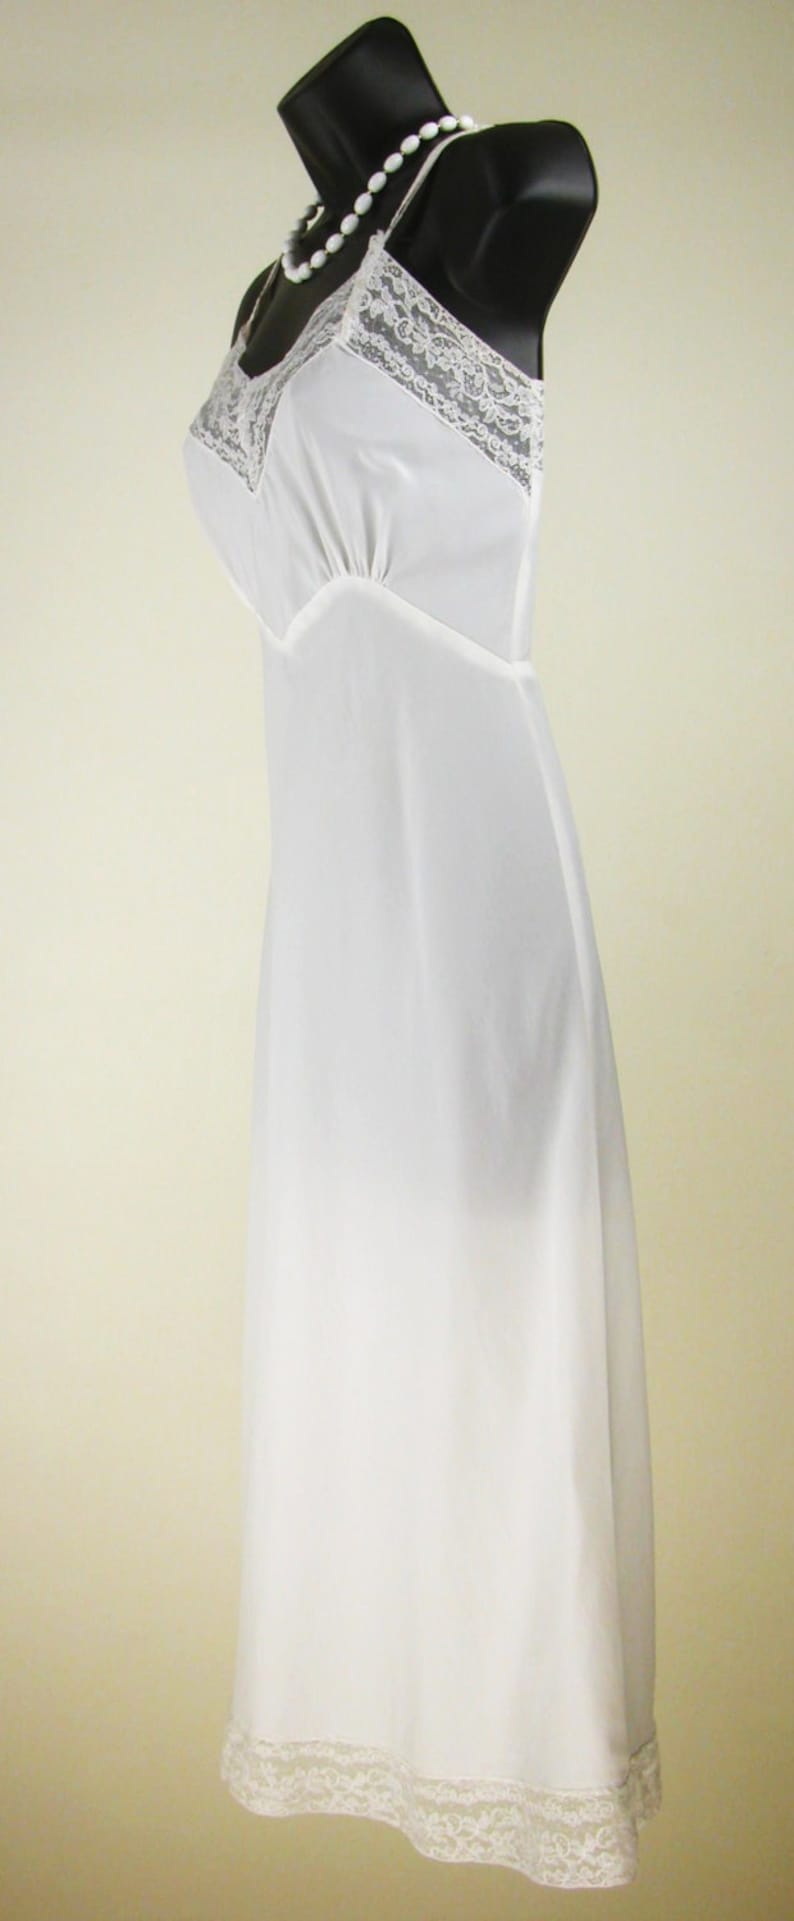 Vintage 1940's 50's FANTASY Full Slip Dress Nightgown Nightie White Chantilly Lace Bias Cut b32 image 4